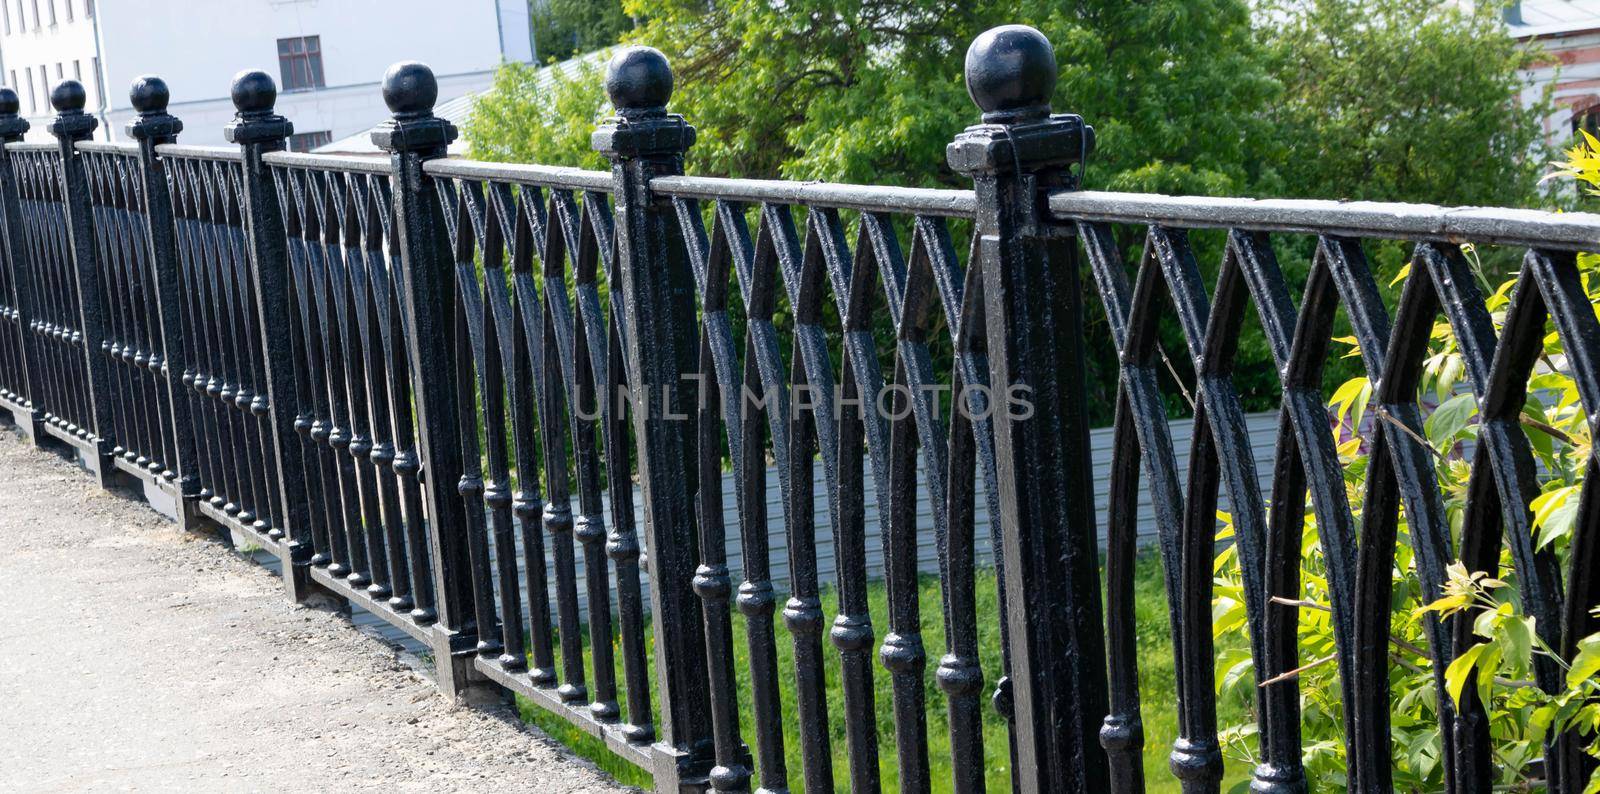 Black forged fence on a granite base by lapushka62